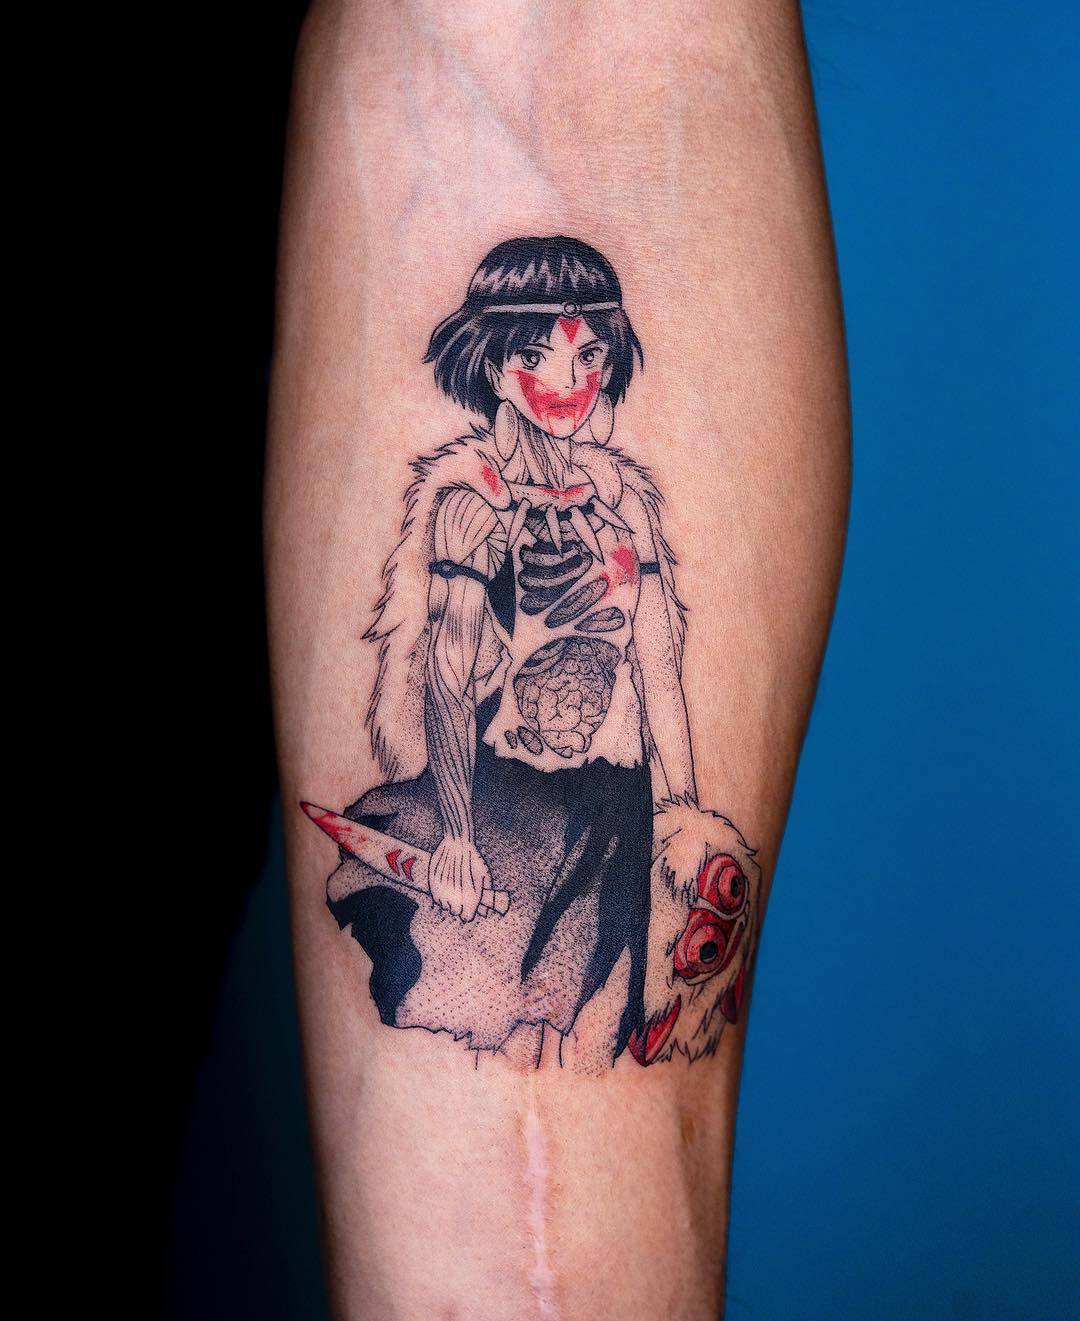 Tattoo artist Oozy, authors sketch surrealistic tattoo | Seoul, Korea